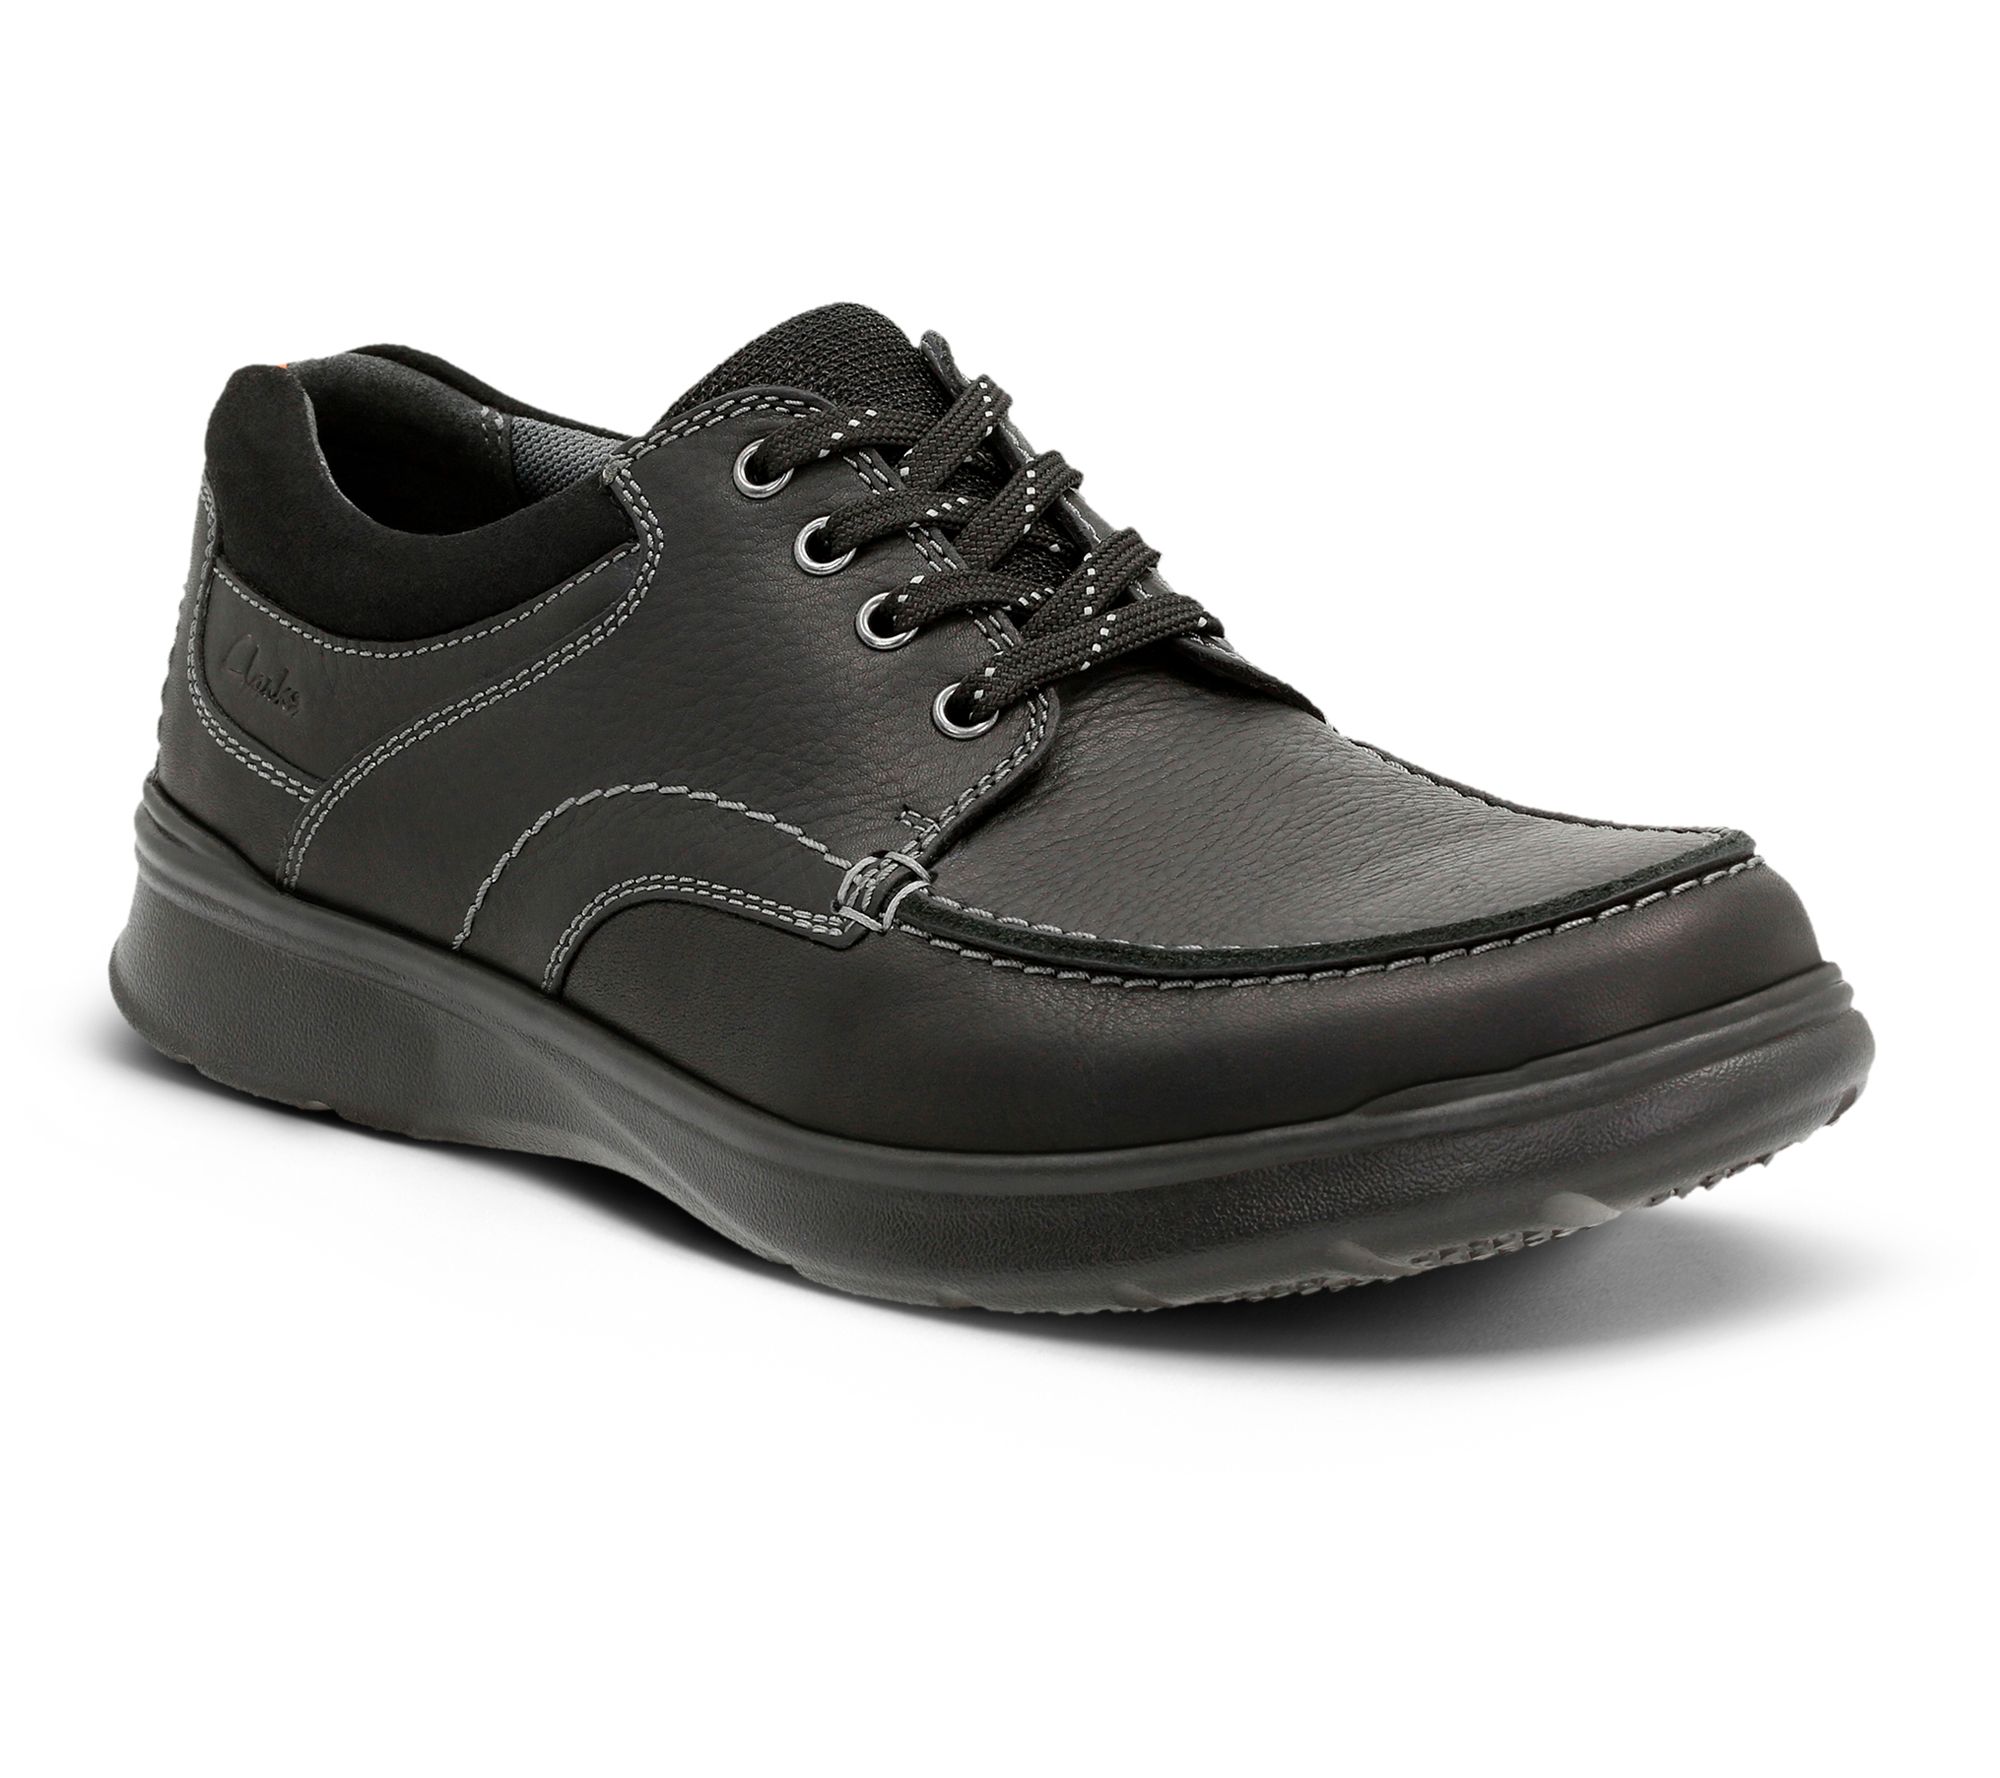 Clarks Leather Shoes -Cotrell Edge - QVC.com